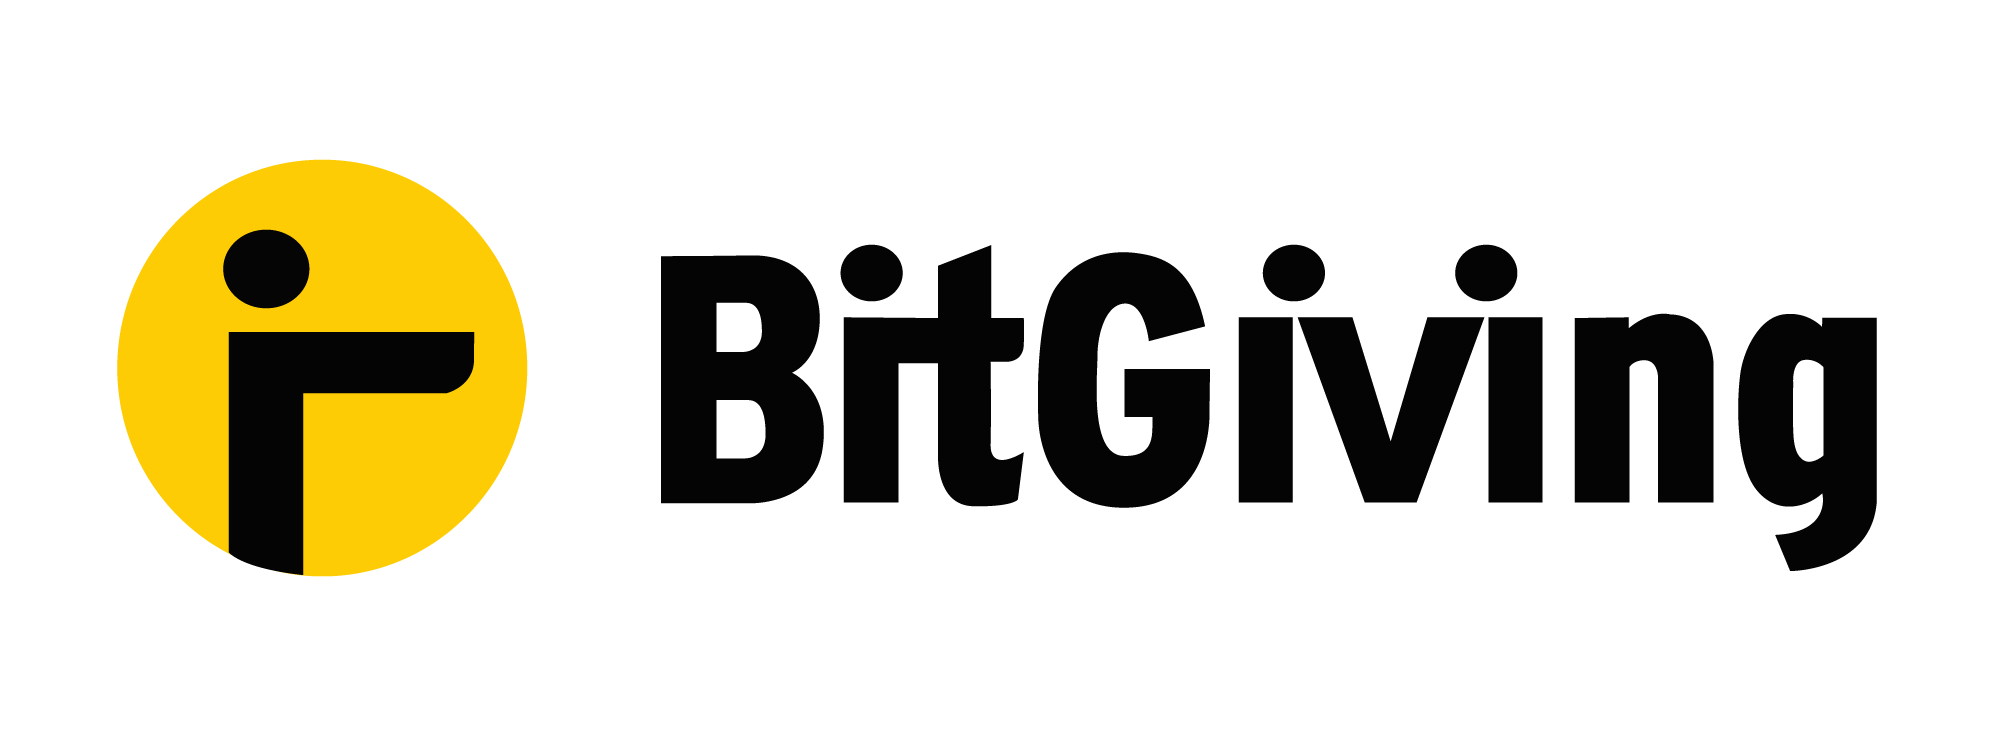 BitGiving logo